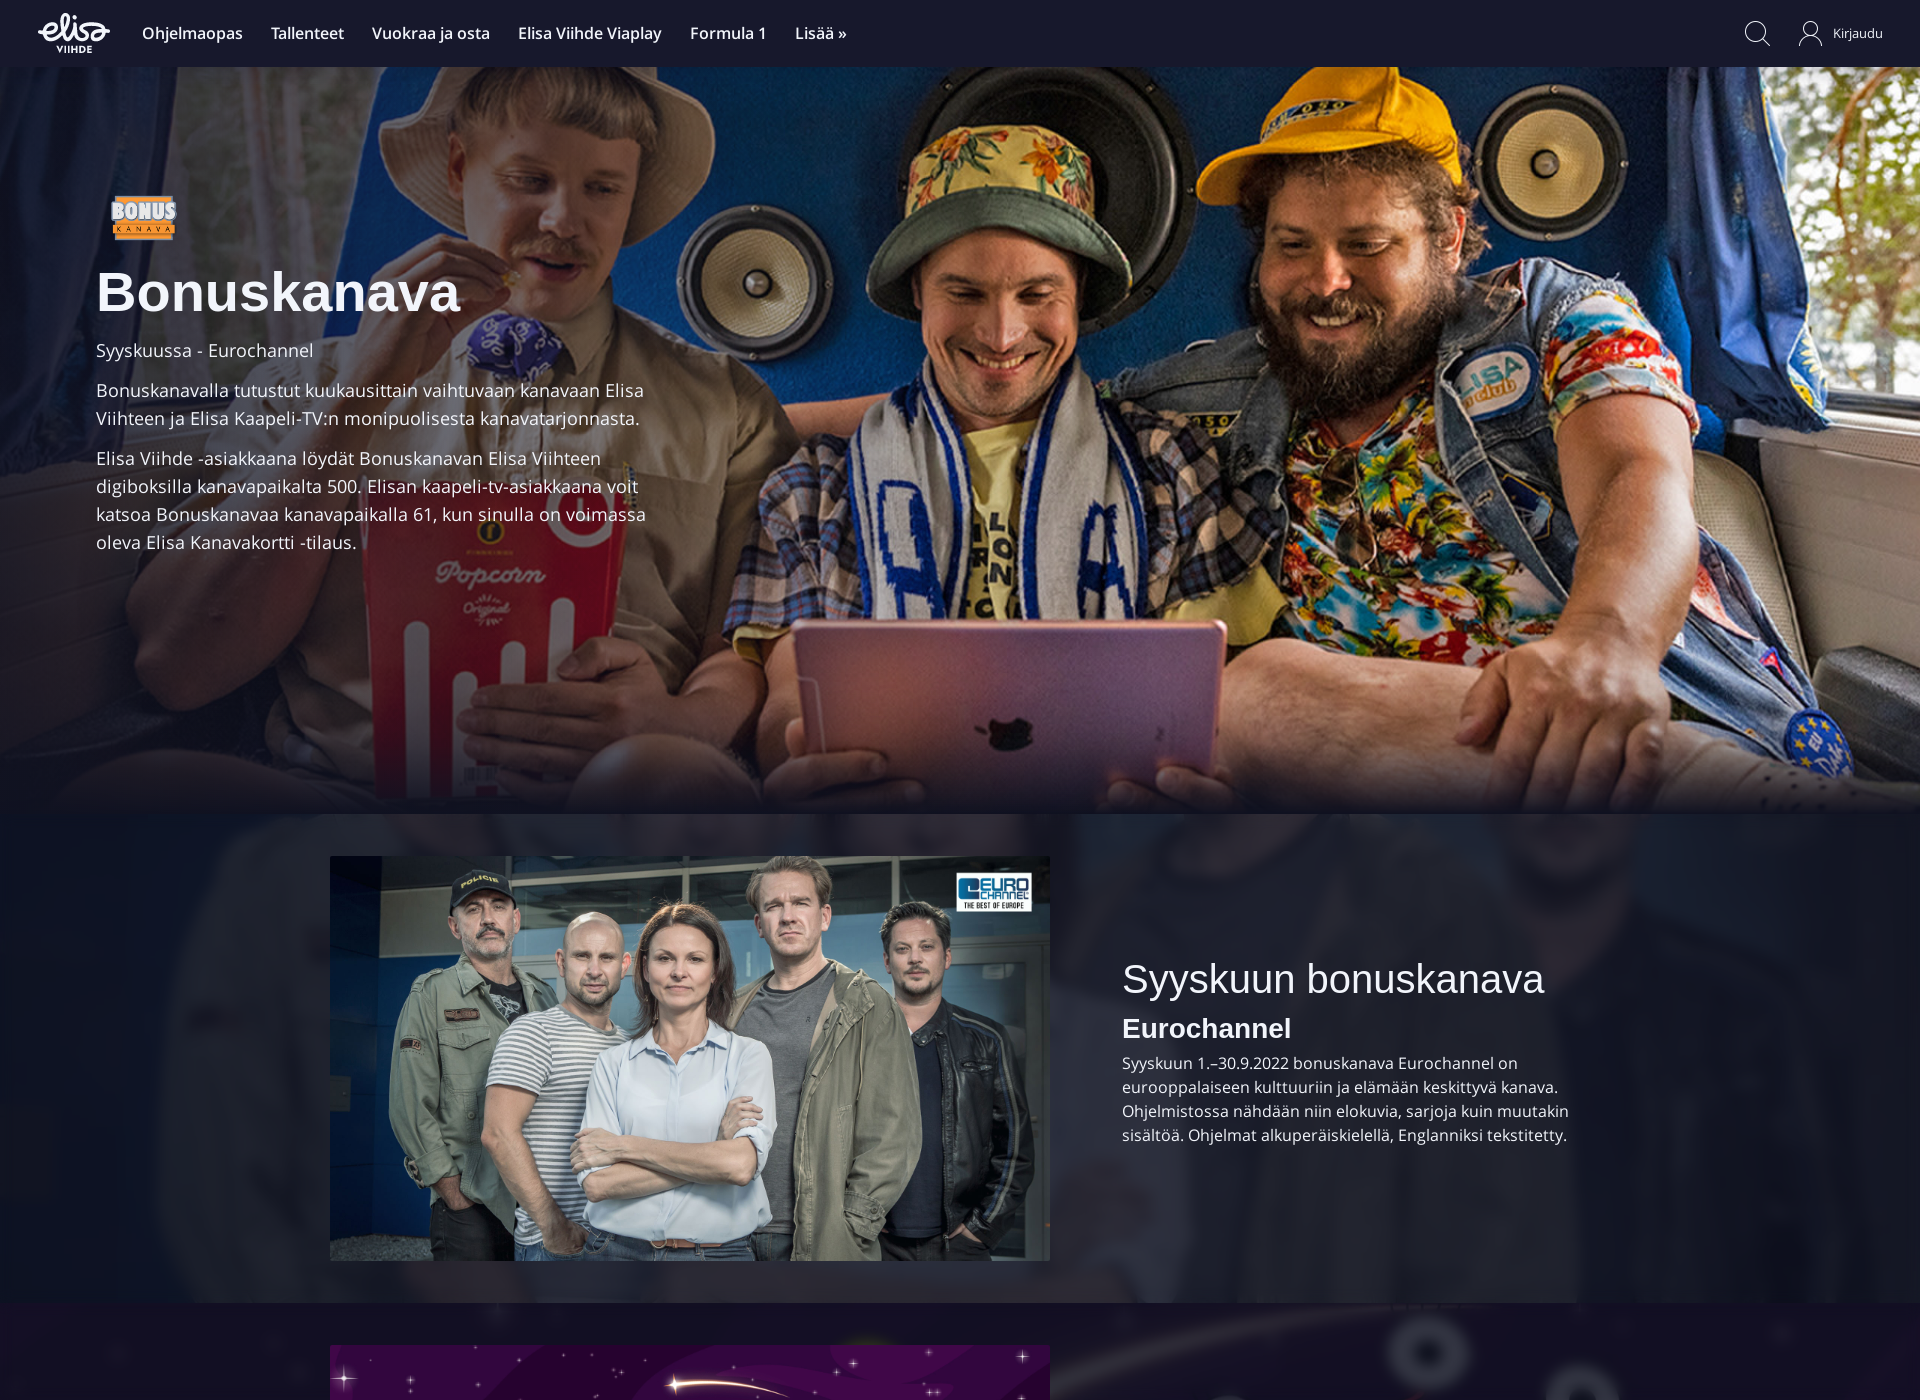 Näyttökuva bonuskanava.fi